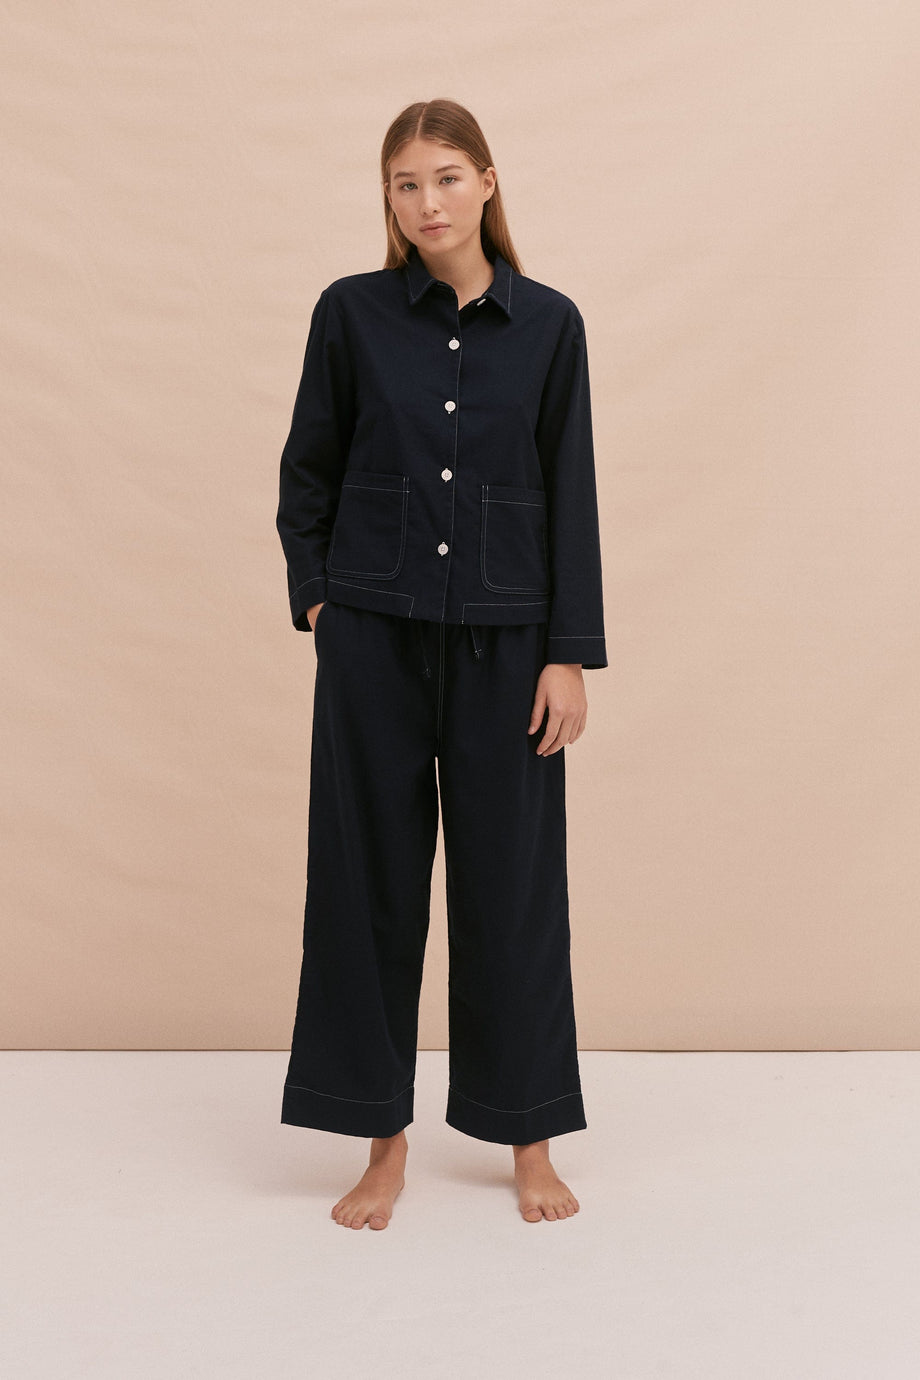 Pocket Pyjama Set Brushed Cotton Navy Contrast Stitching – Desmond & Dempsey